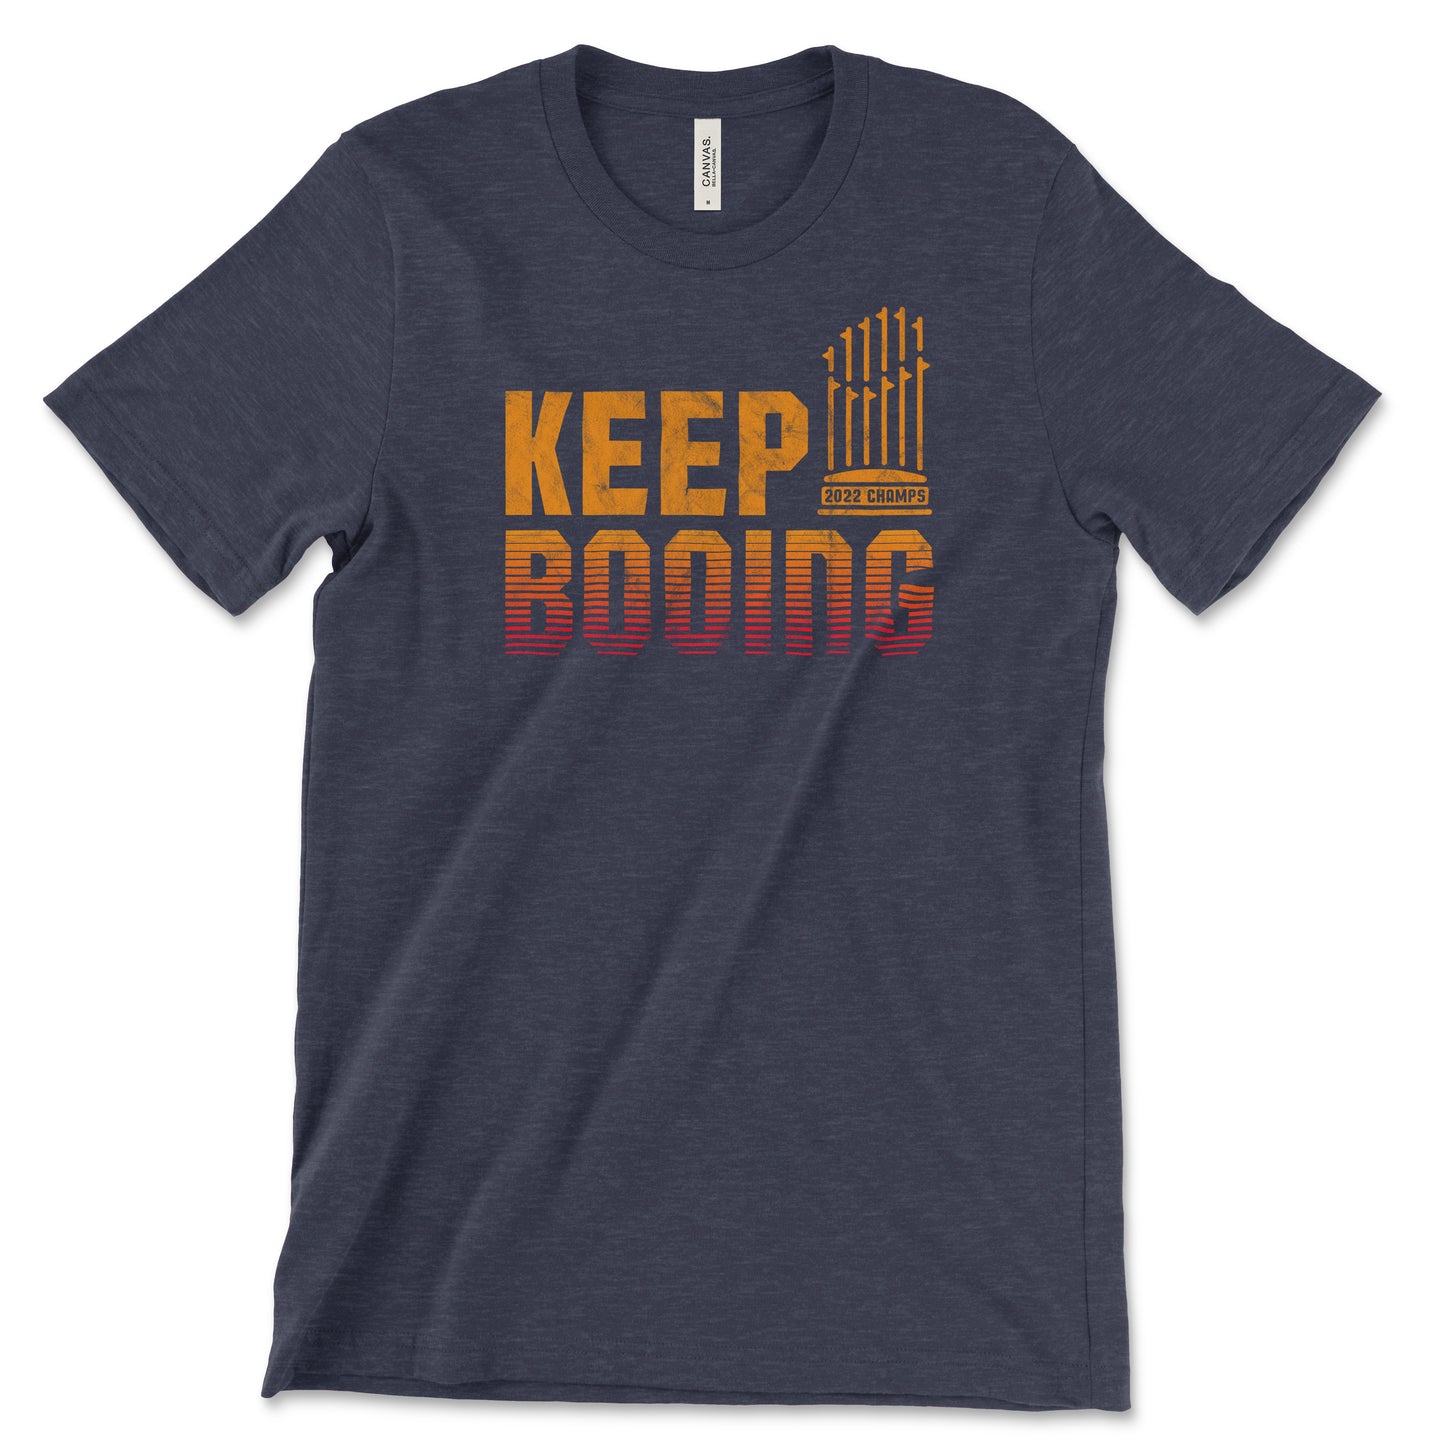 Keep Booing | T-Shirt